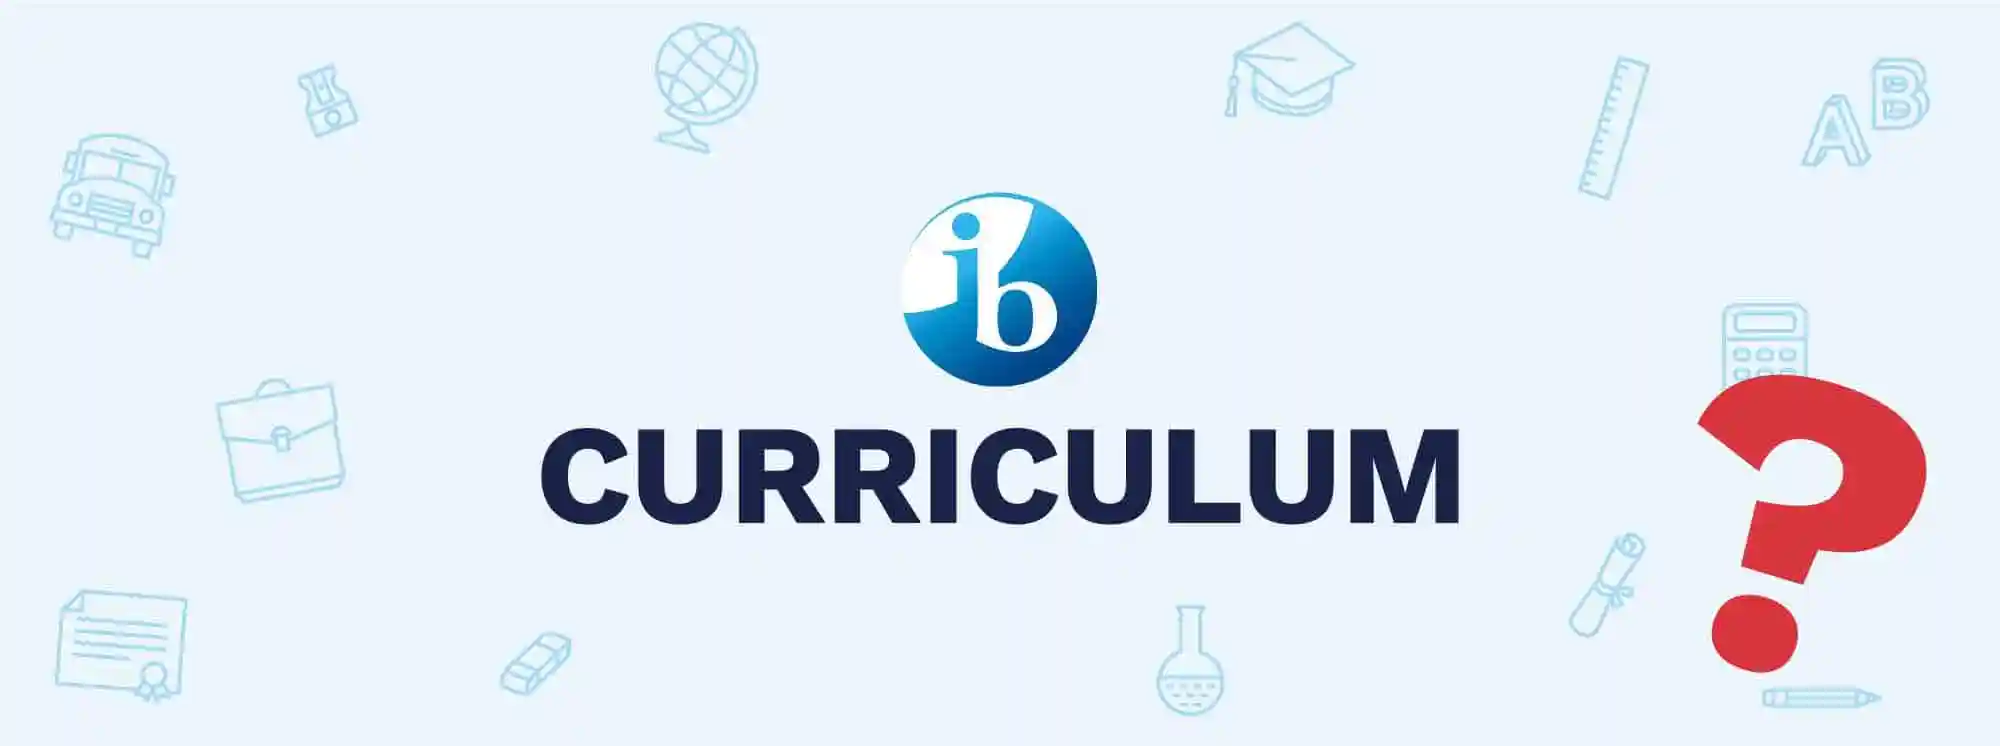 International Baccalaureate International Baccalaureate International Baccalaureate IB Curriculum | IB Education Explained